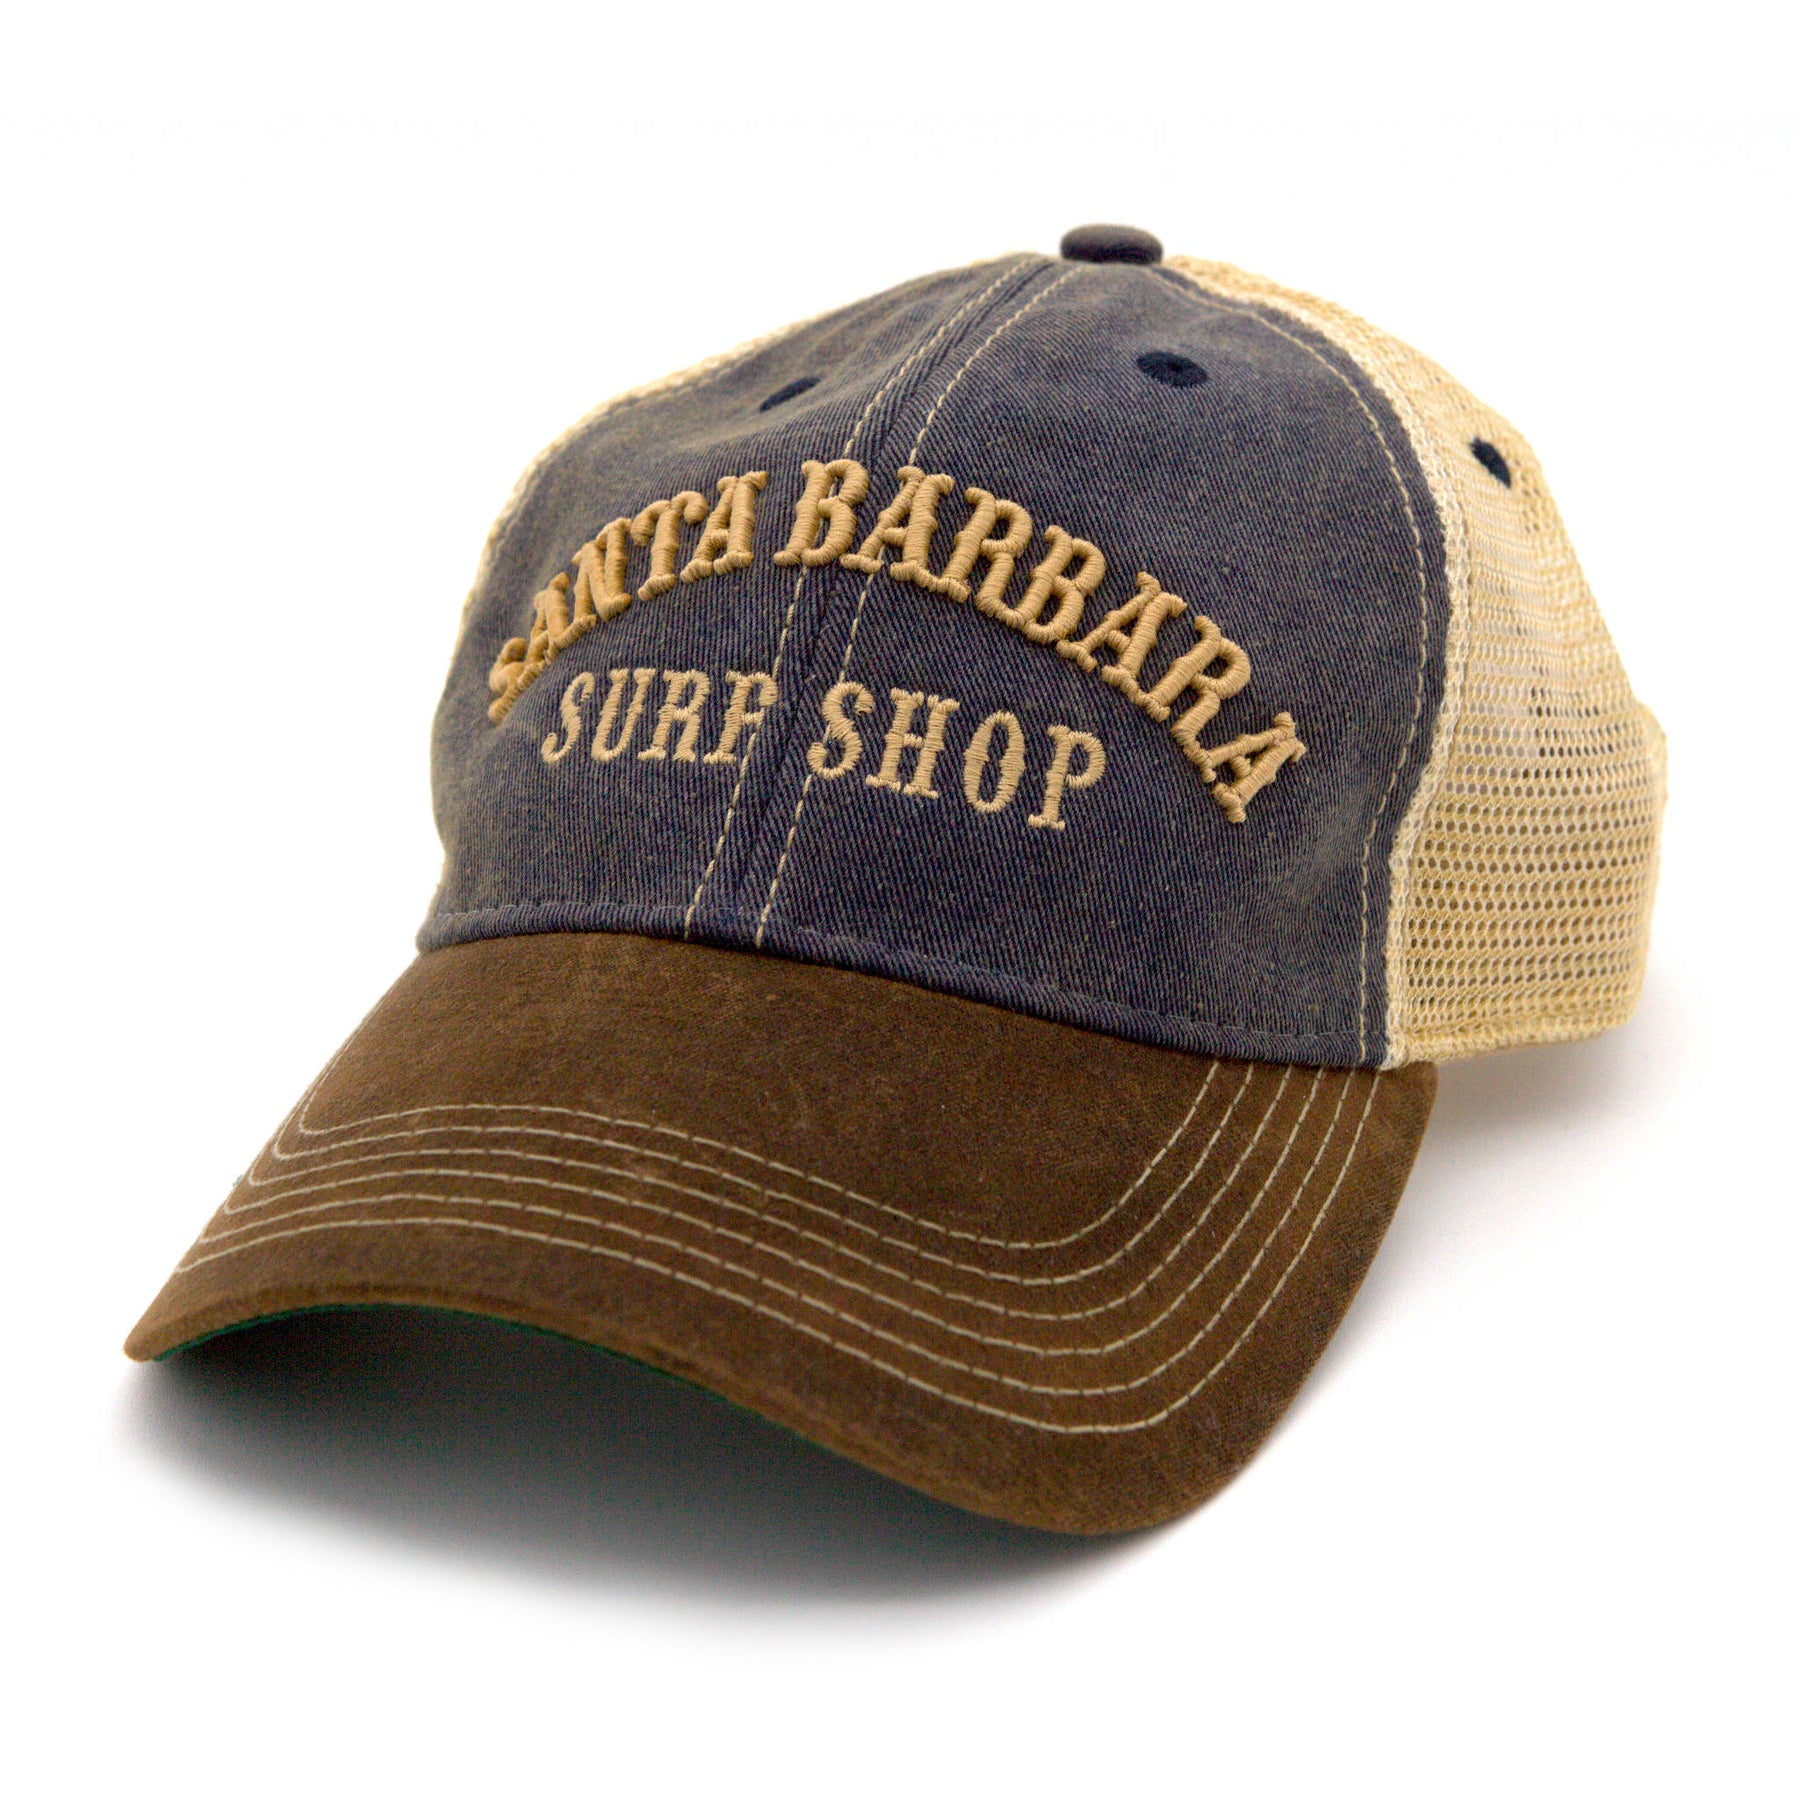 Santa Barbara Surf Shop Country Western Trucker Hat Green/Brown